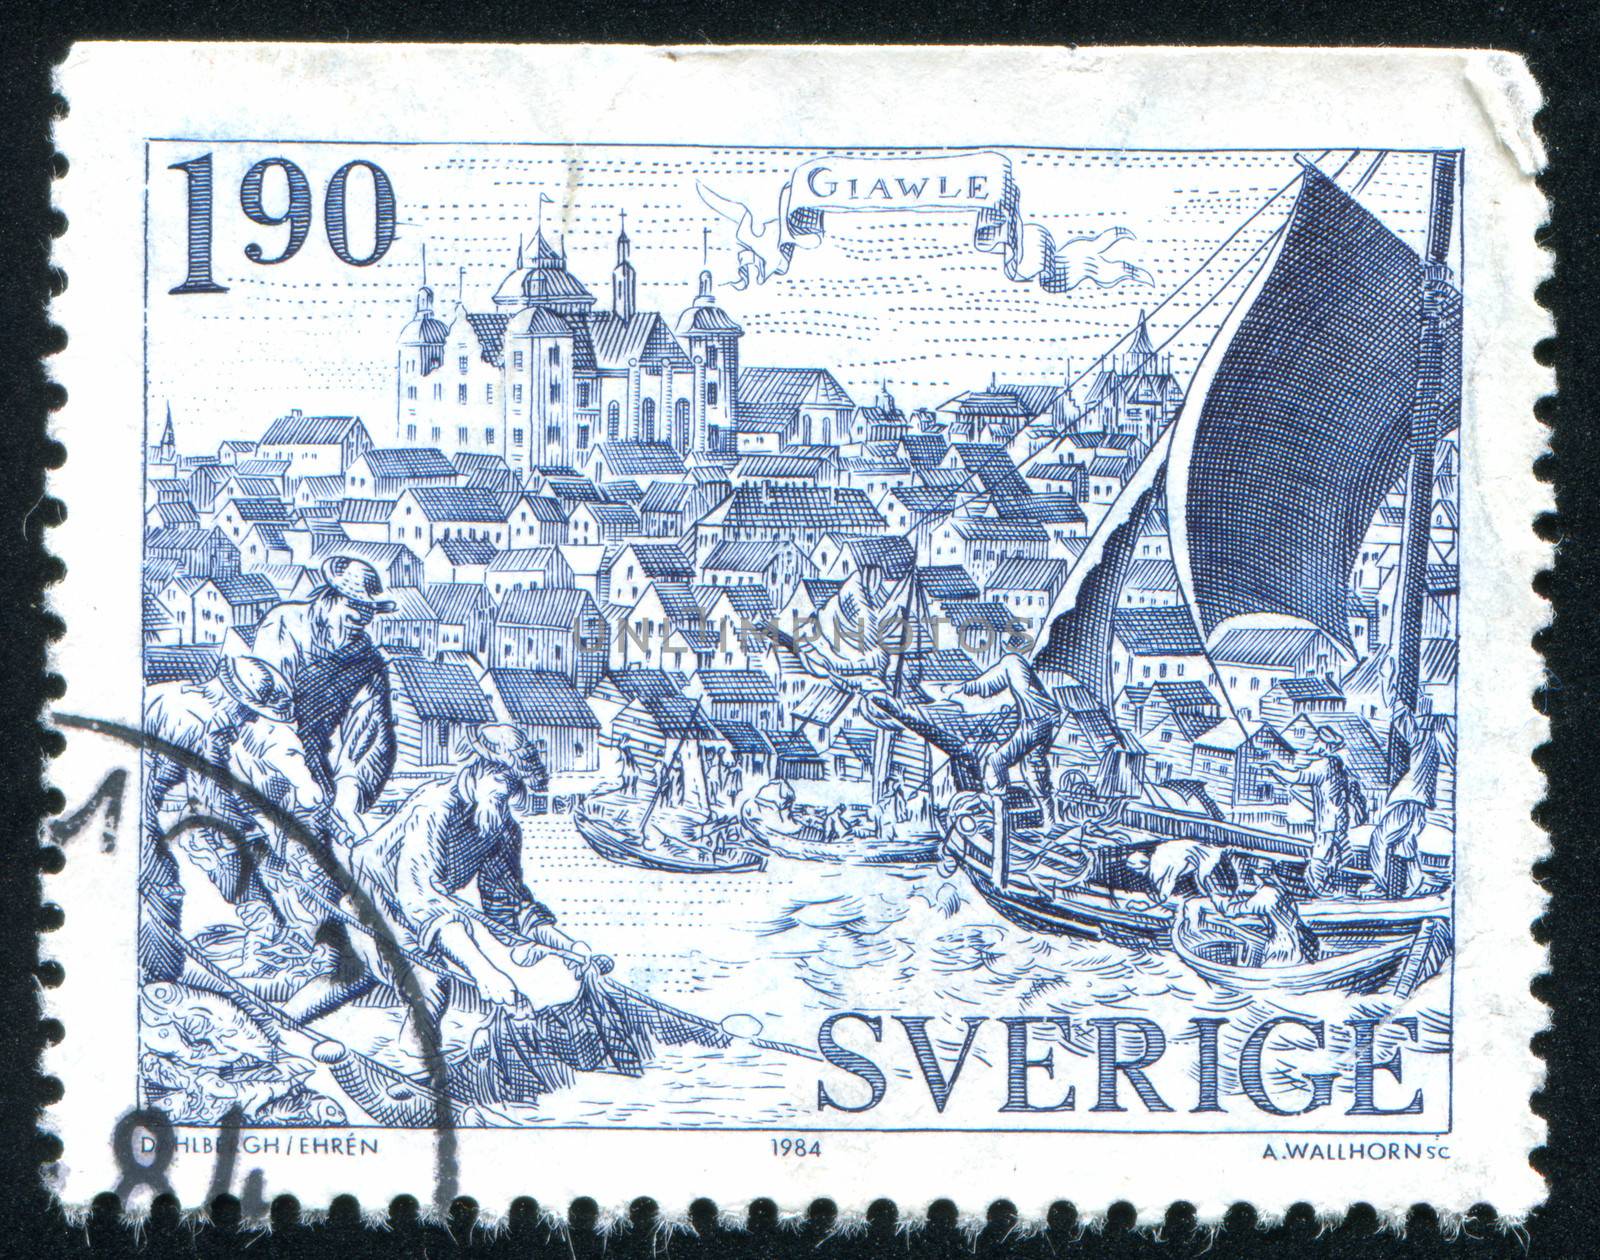 SWEDEN - CIRCA 1984: stamp printed by Sweden, shows Gavle, circa 1984